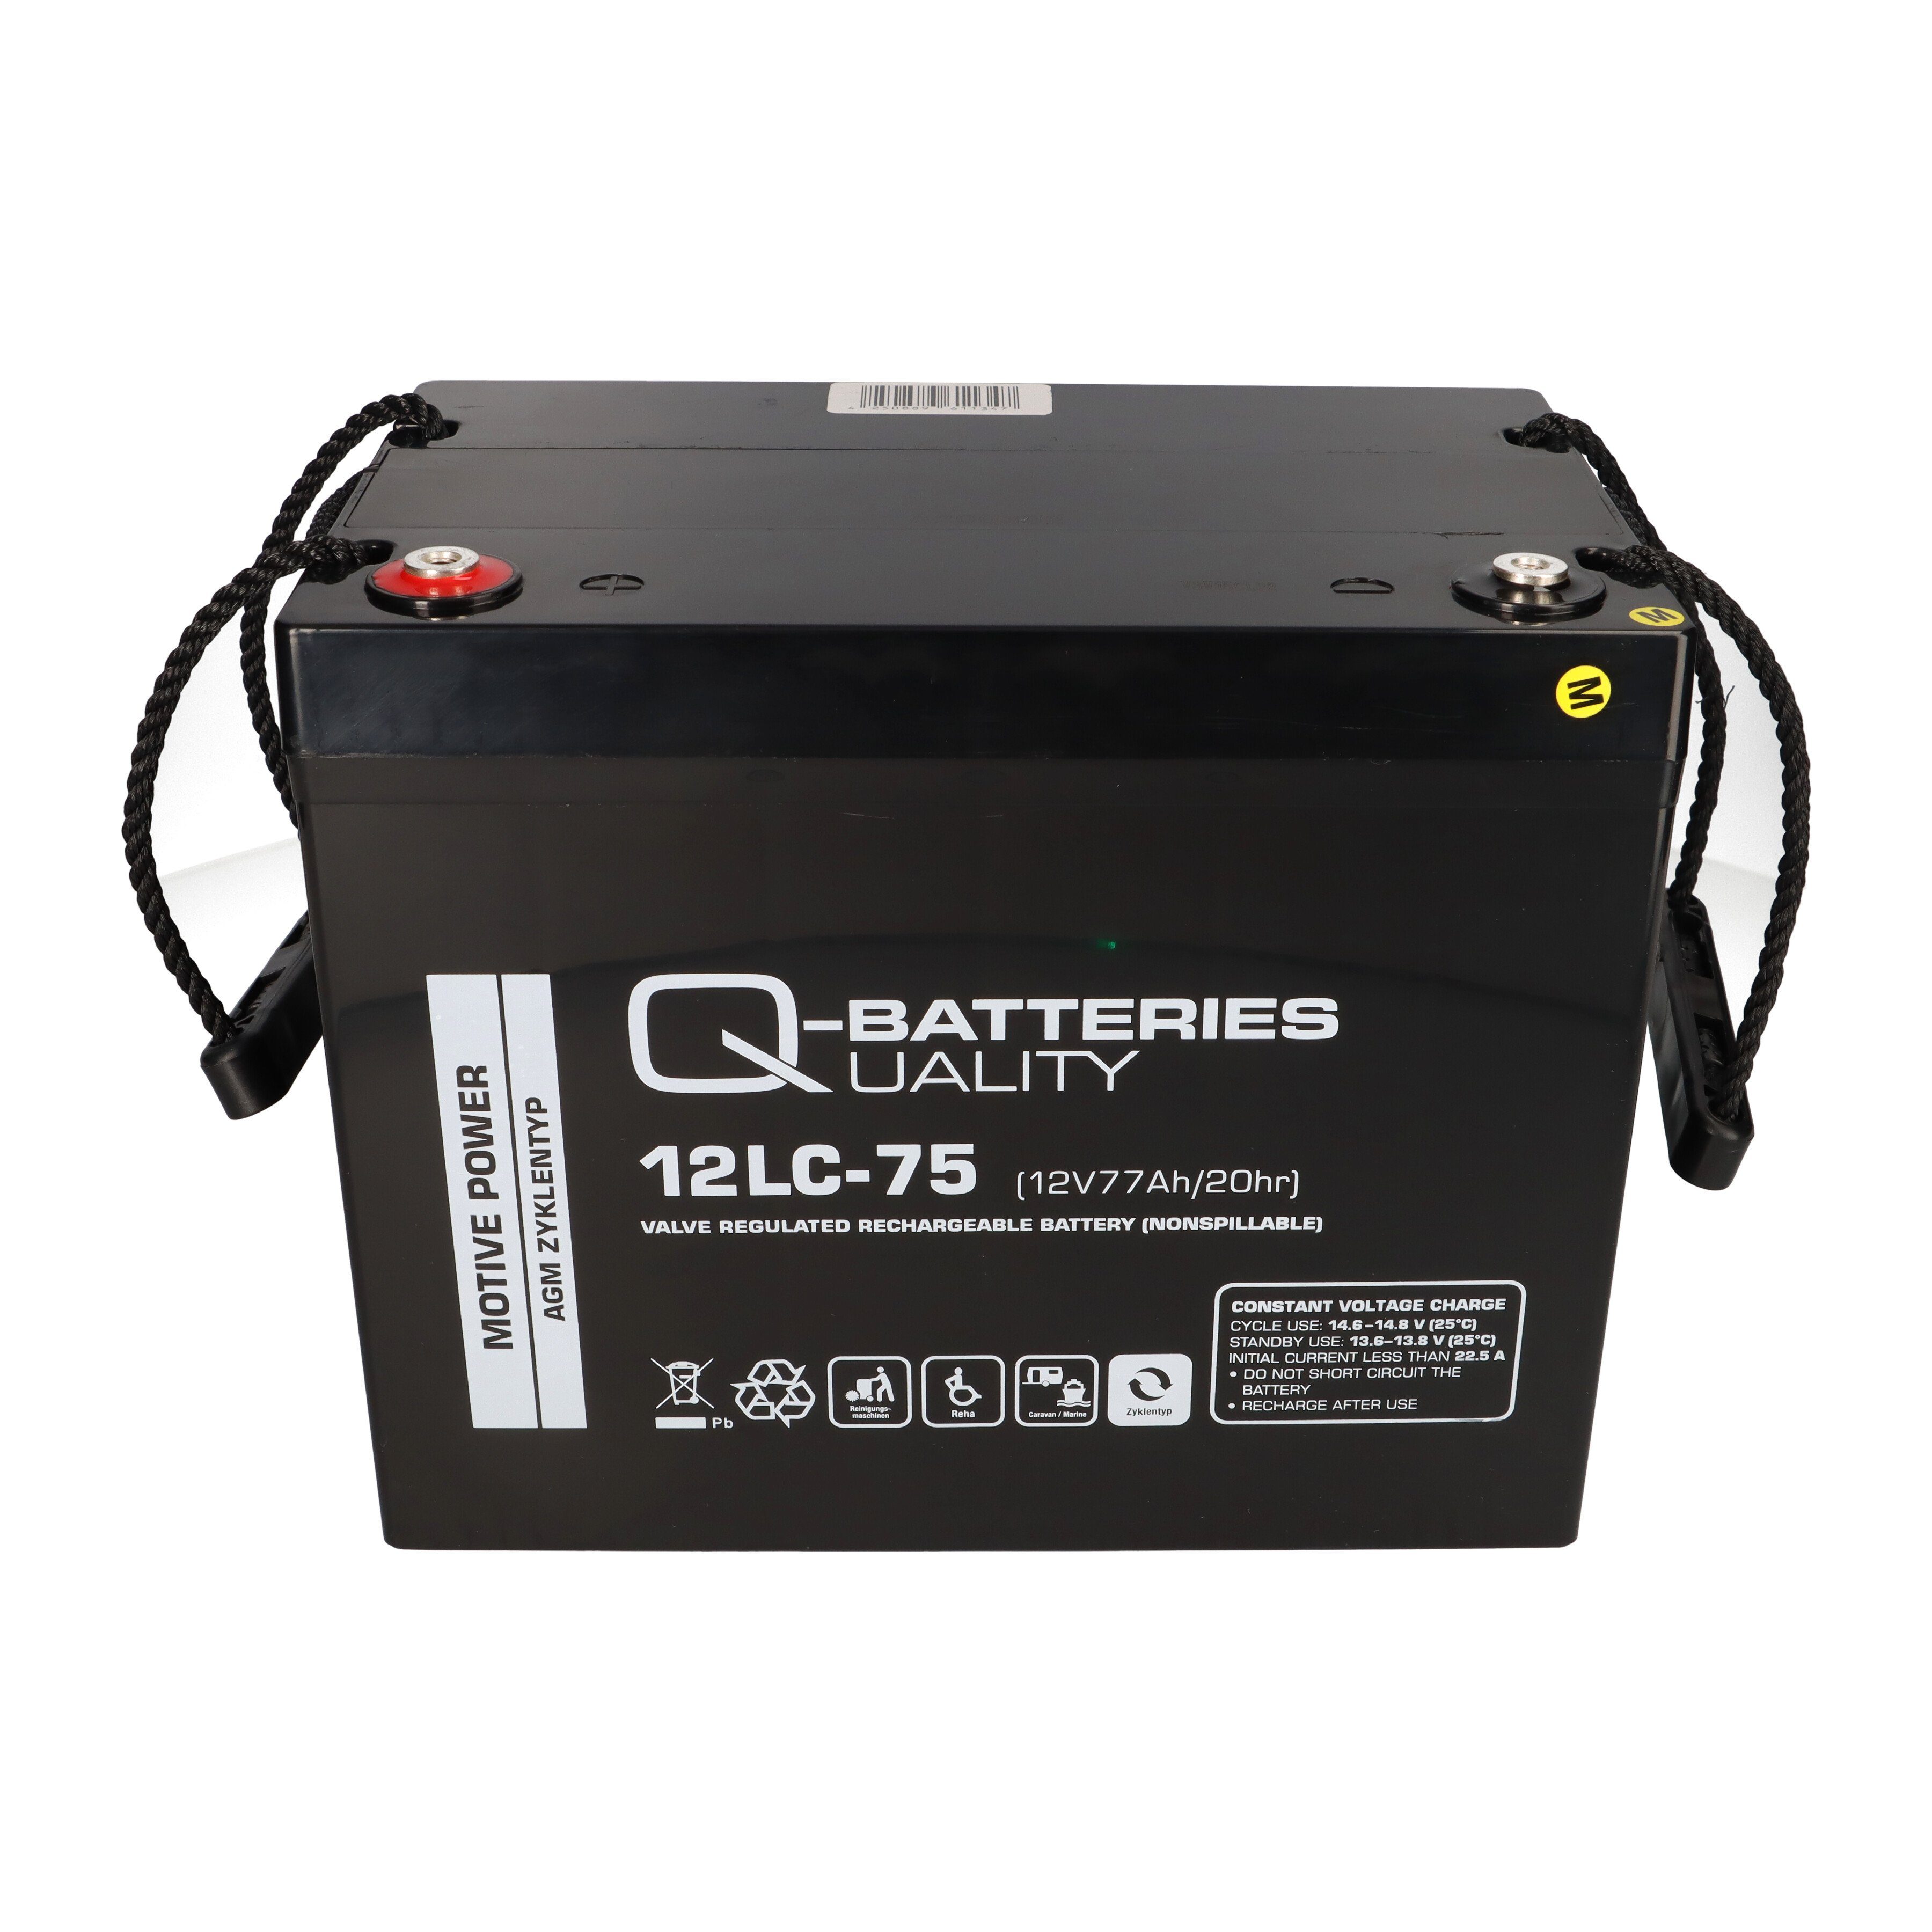 Q-Batteries / Bleiakkus Zyklentyp Akku 12LC-75 12V Blei 77Ah Deep AGM - Q-Batteries Cycle -